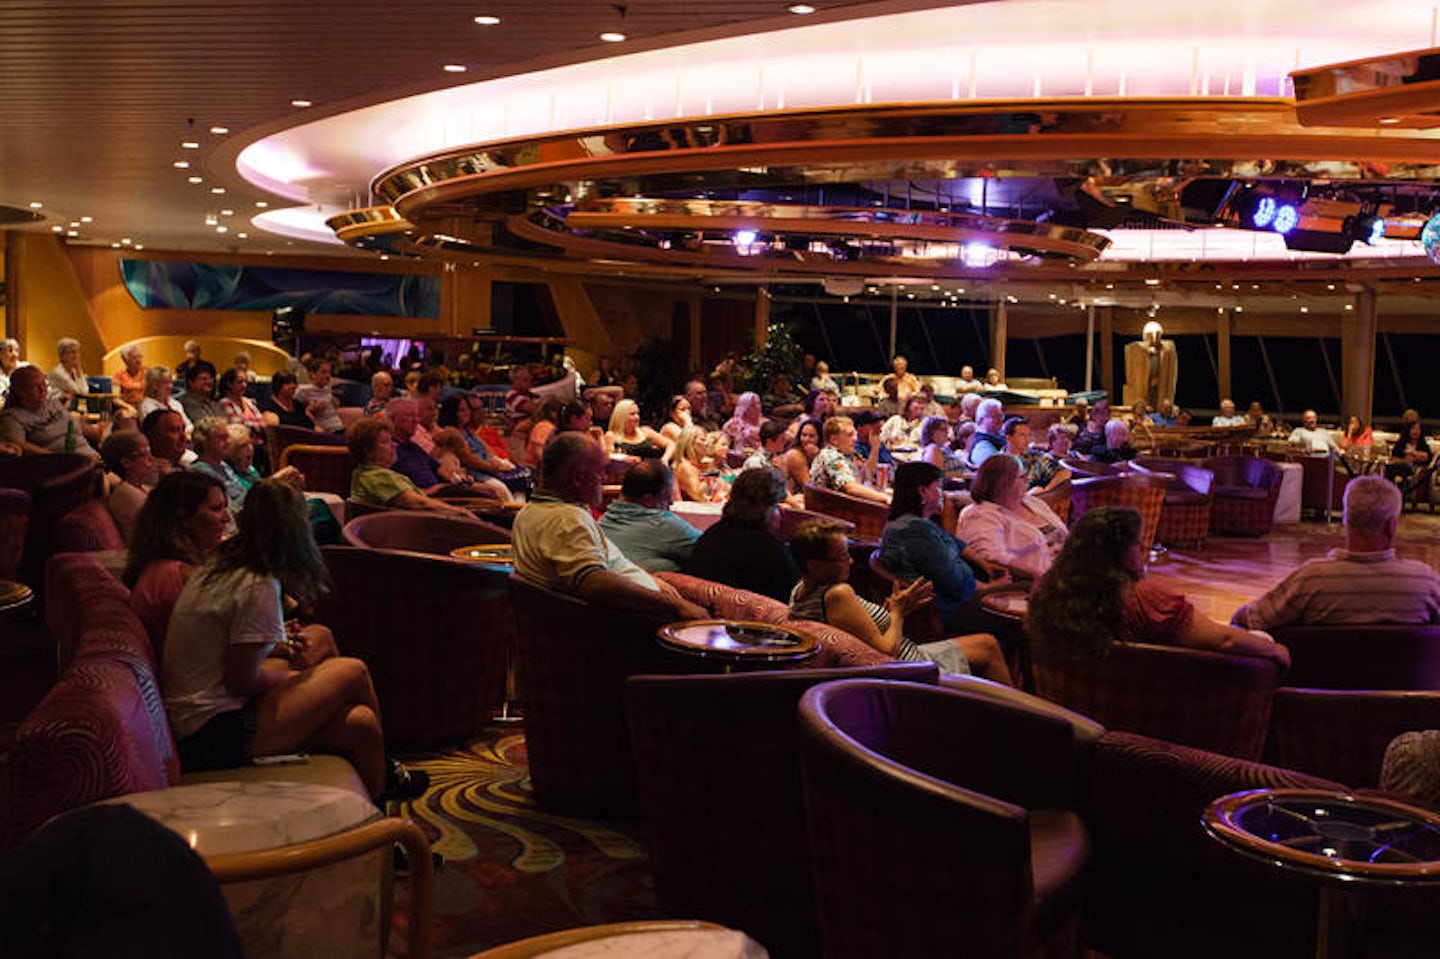 South Pacific Lounge on Grandeur of the Seas